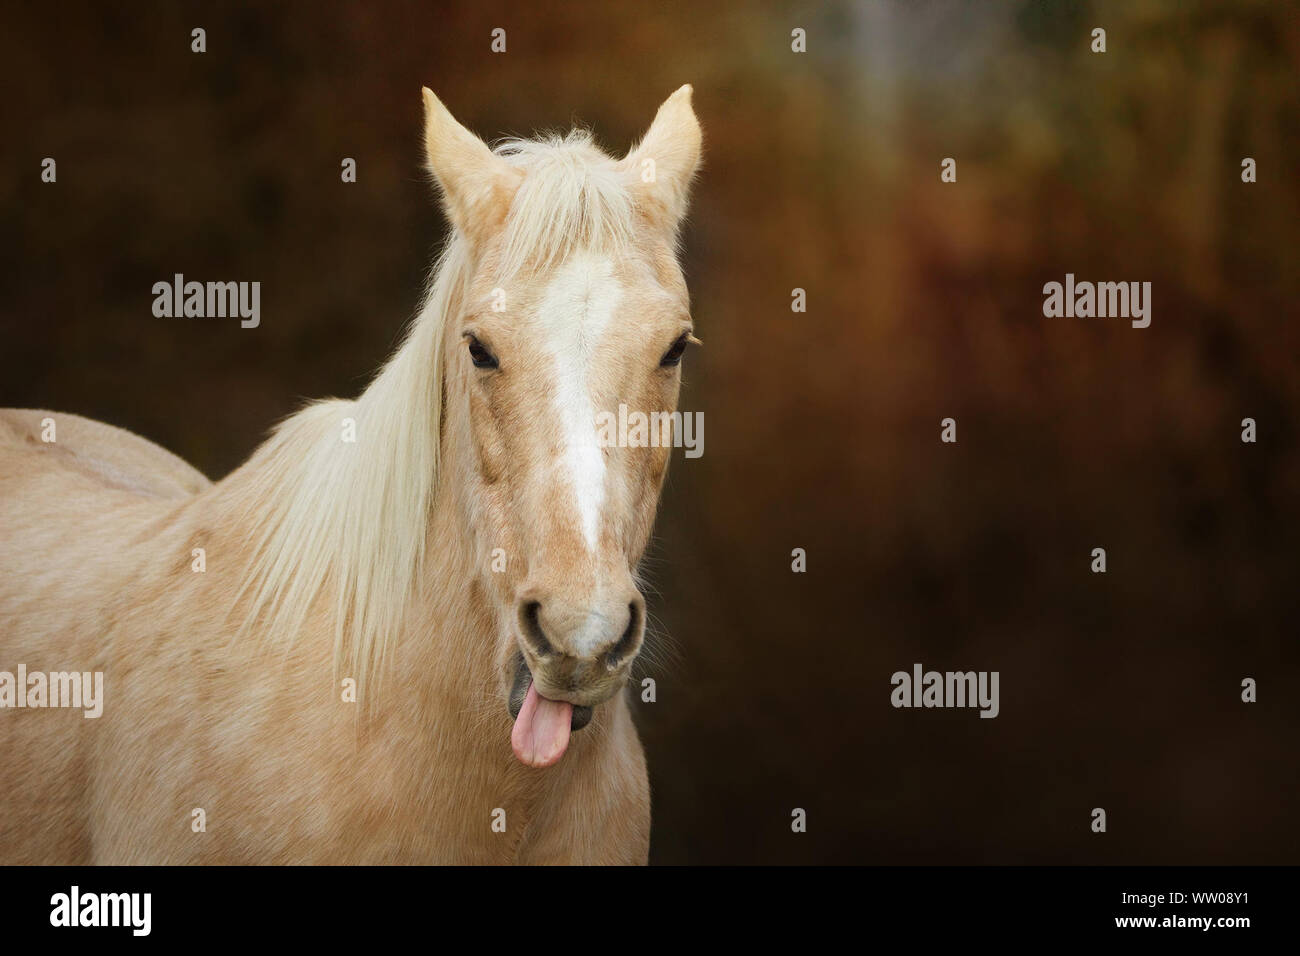 Caballo sacando la lengua el día fotografías e imágenes de alta resolución  - Alamy